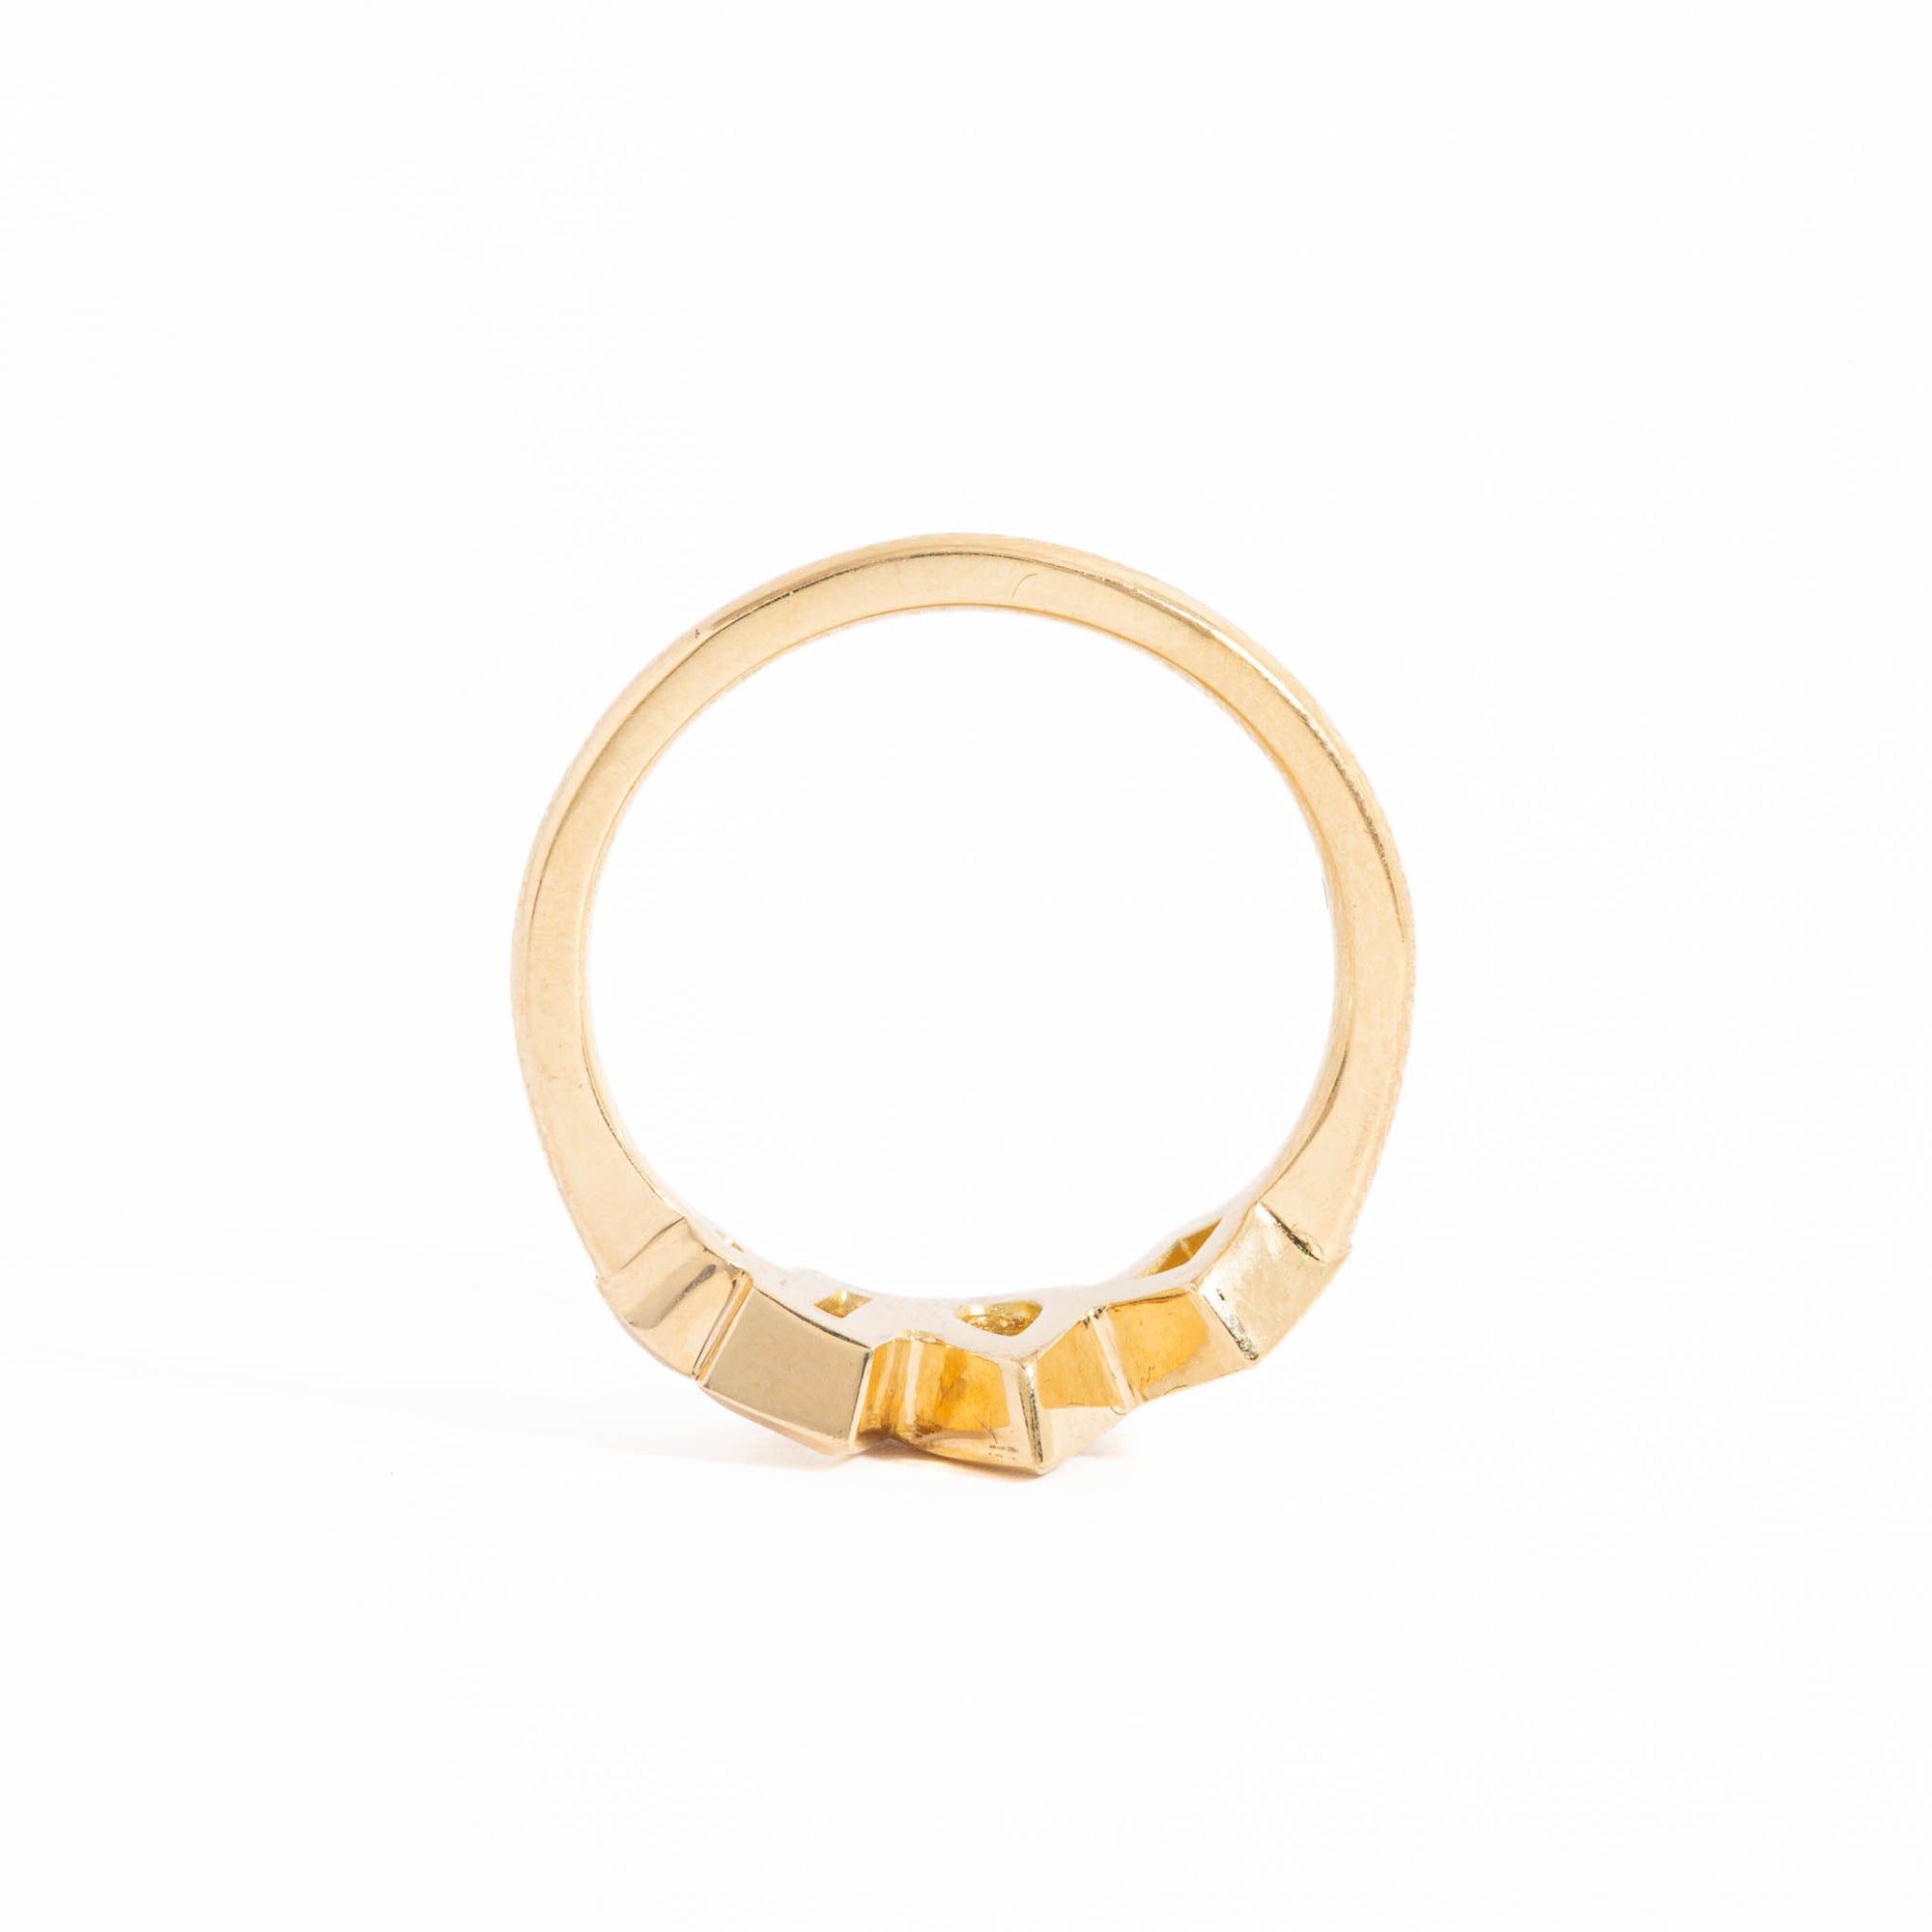 Four Stone Pear Cut, Baguette Cut and Princess Cut Bezel Set Diamond Engagement Ring in 18 Carat Yellow Gold 